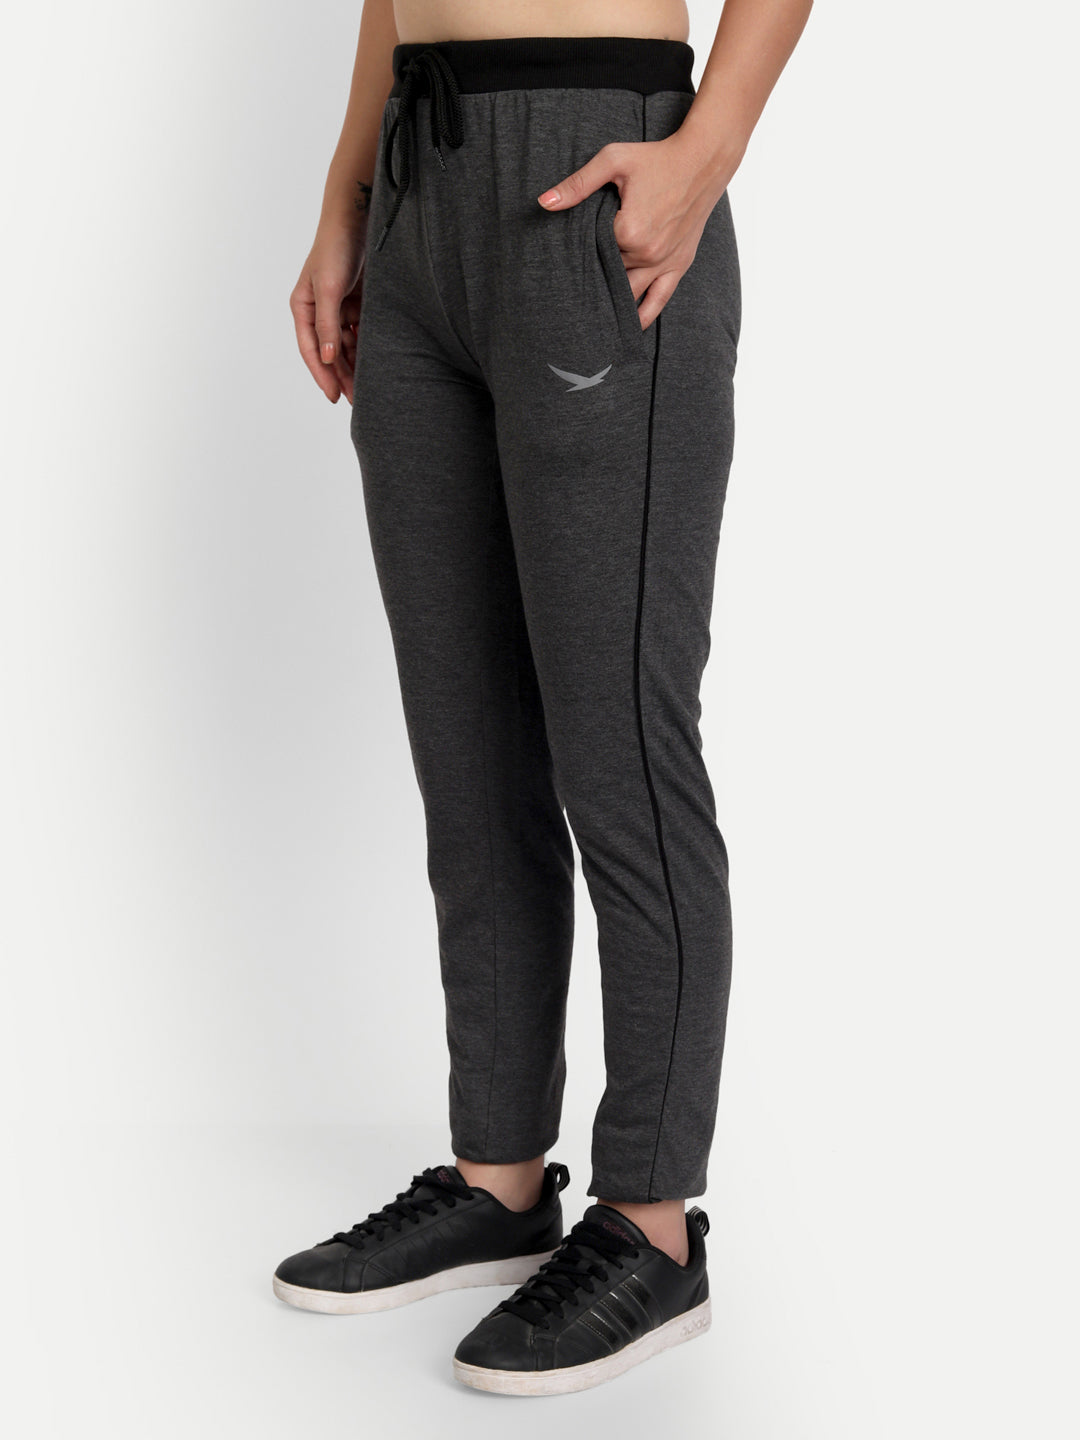 Khaki Solid Full Length Casual Men Comfort Fit Trousers - Selling Fast at  Pantaloons.com